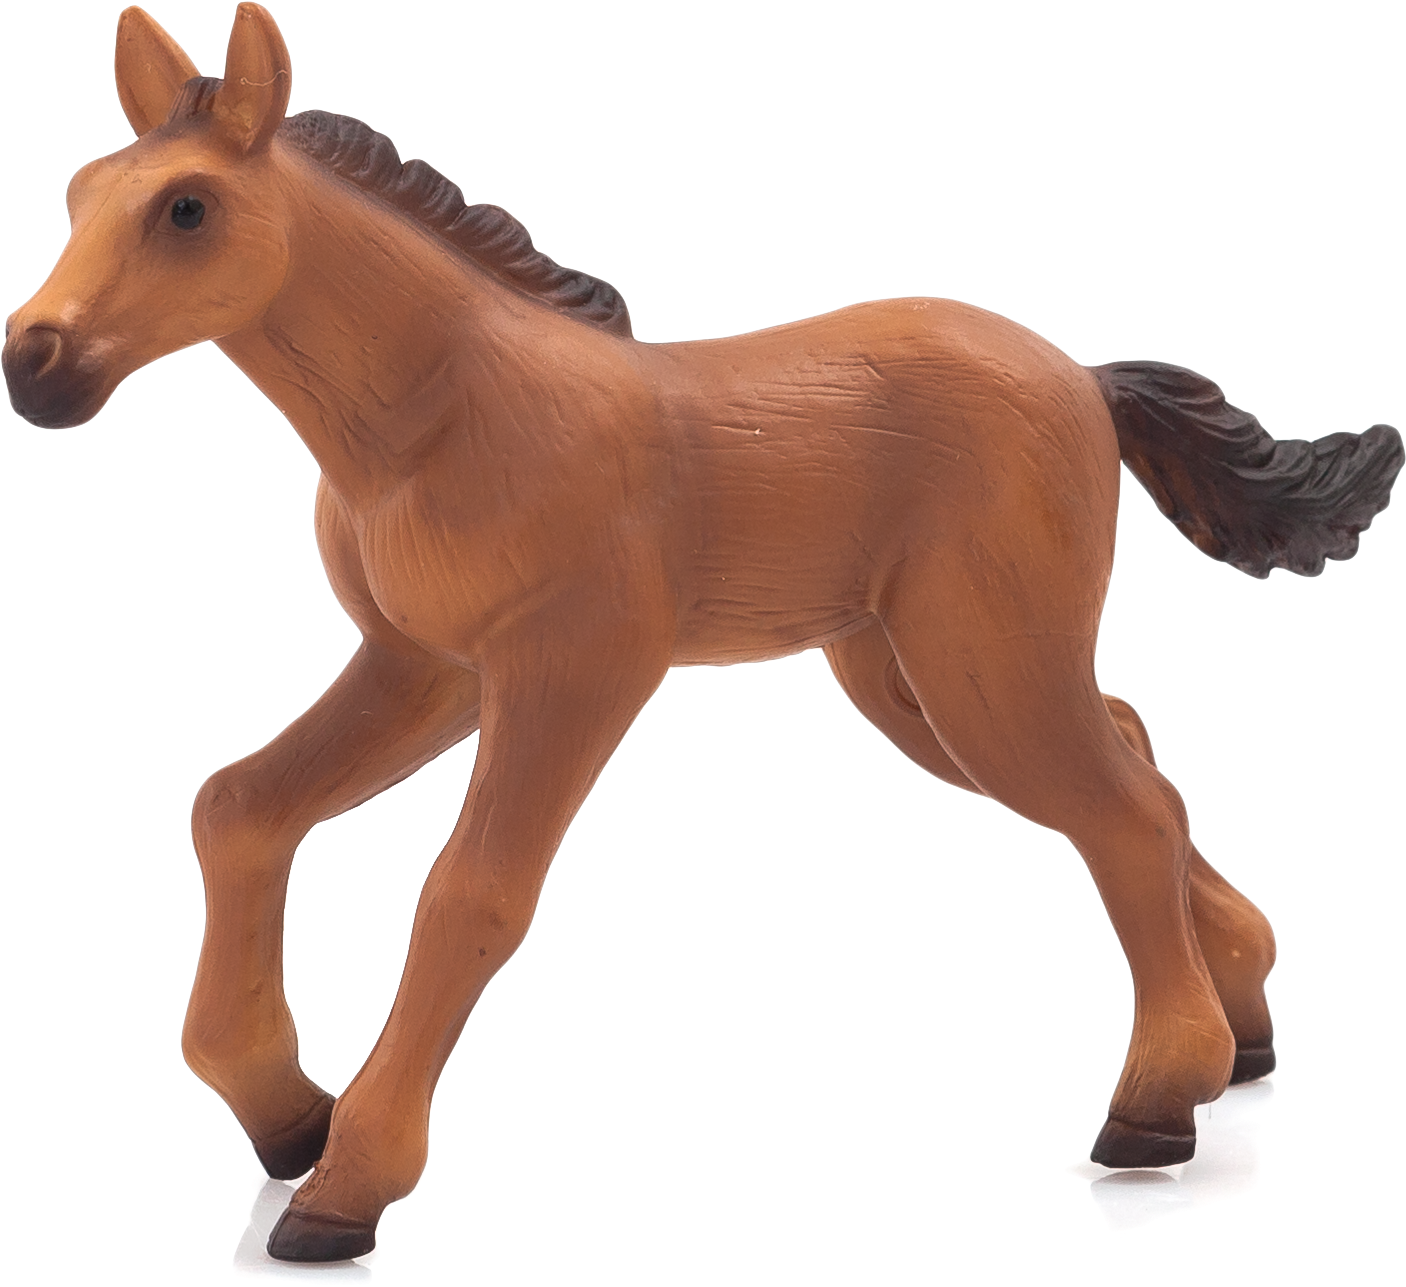 Brown Foal Figurine Image PNG